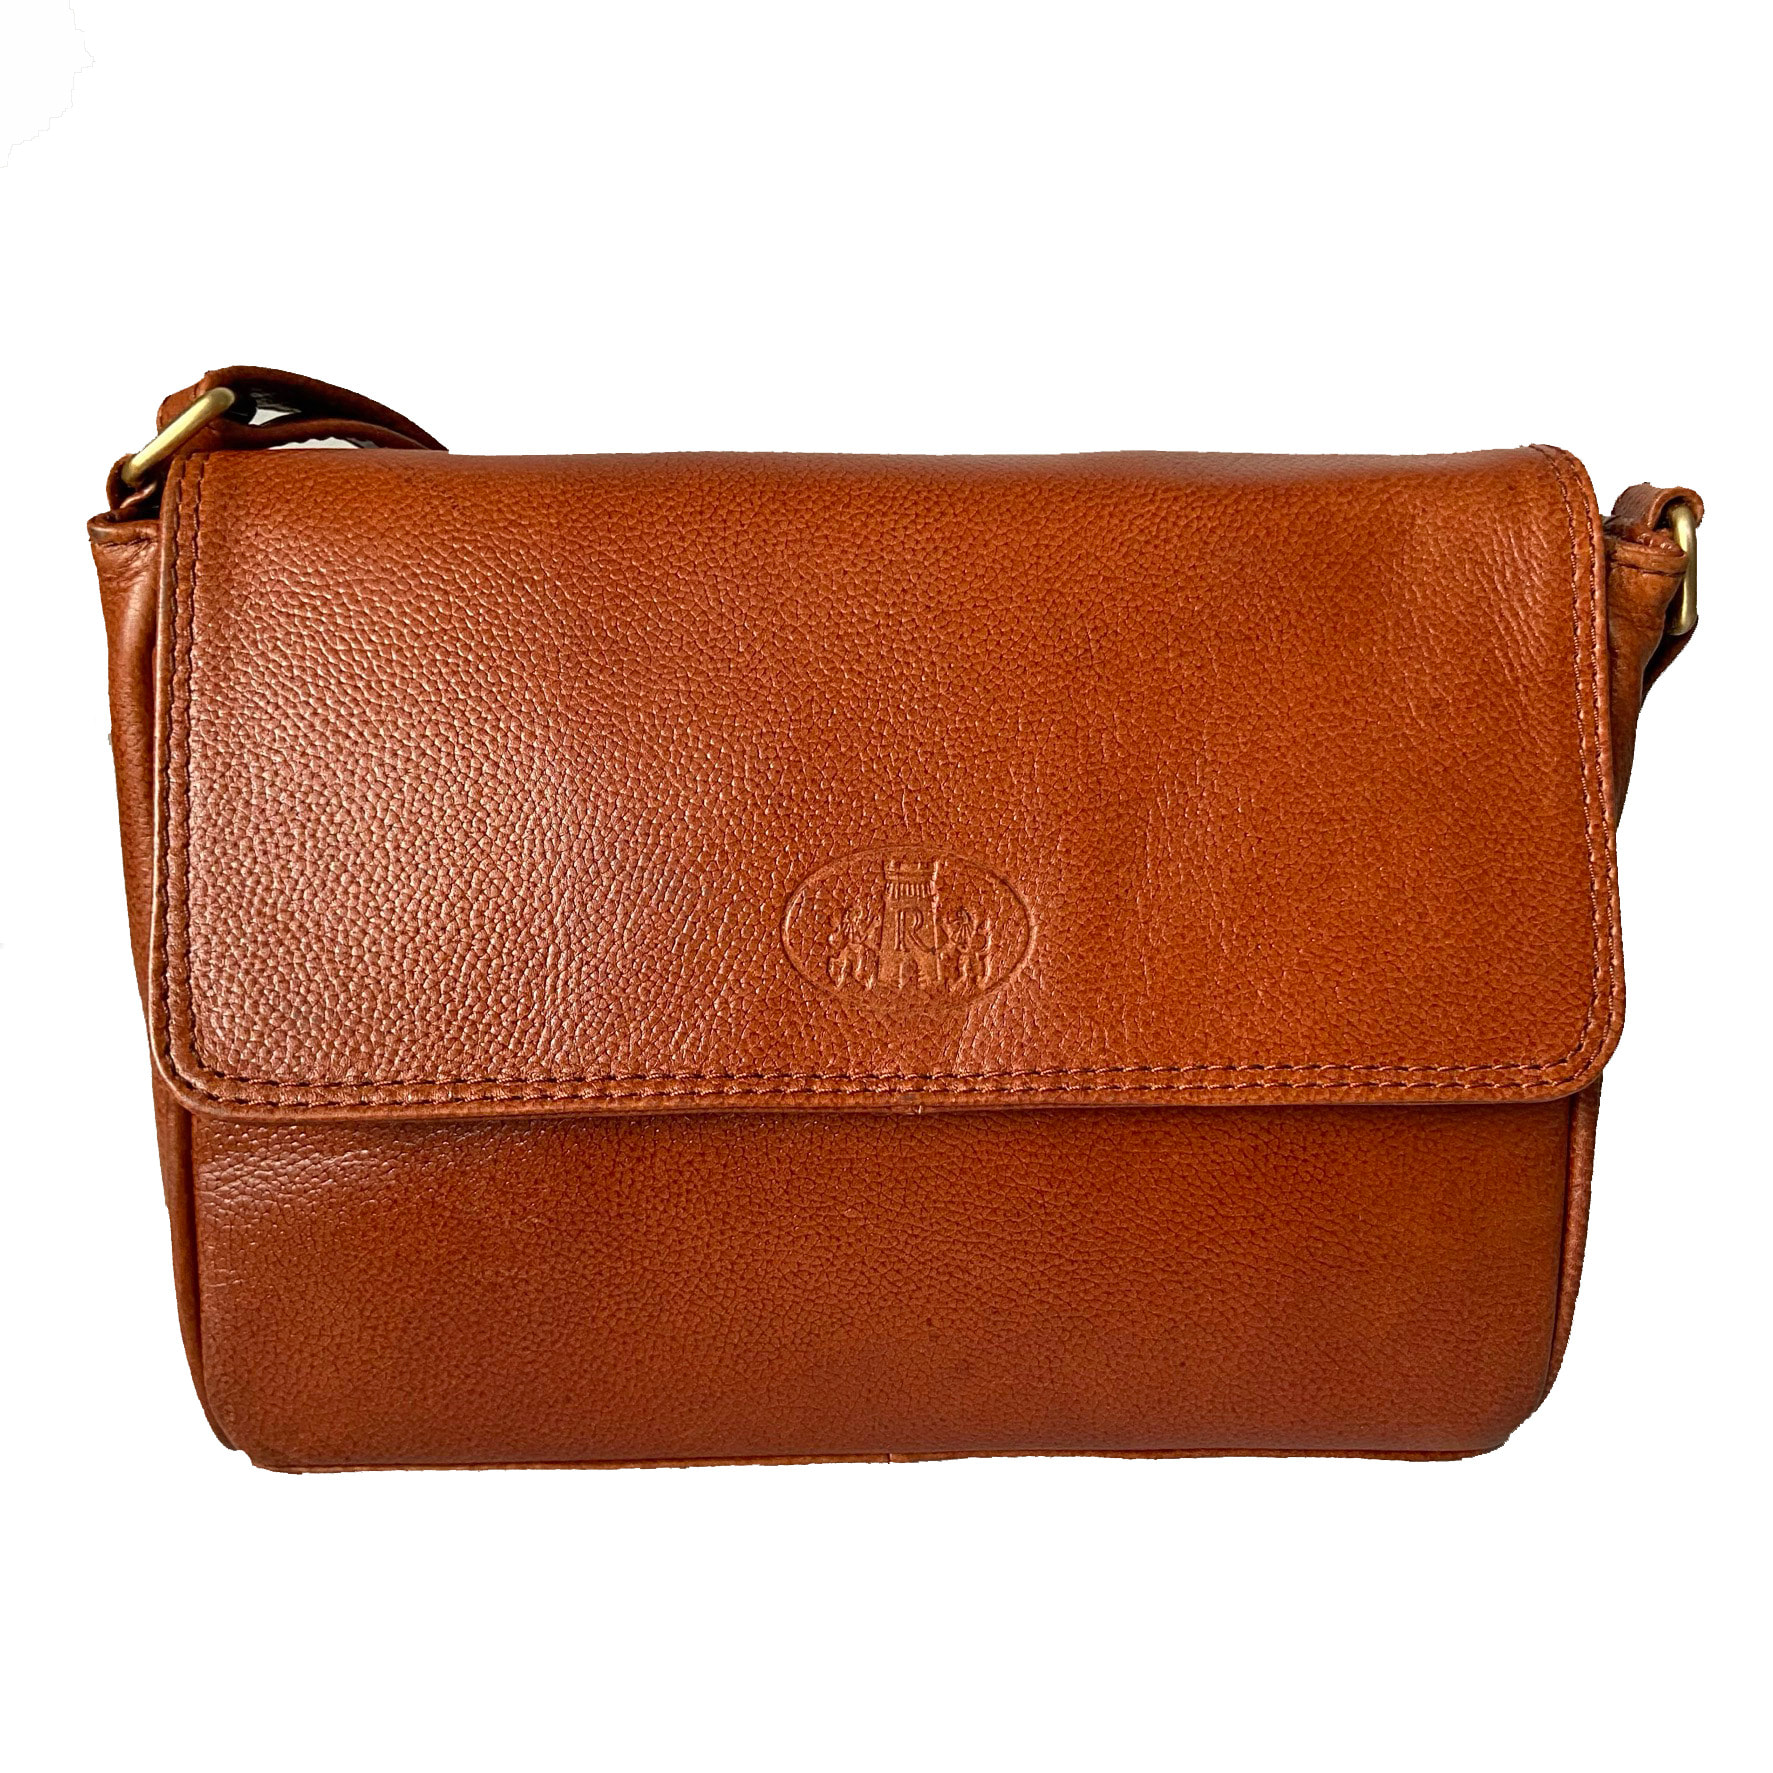 Rowallan Tan Leather Organiser Handbag, Shoulder Bag